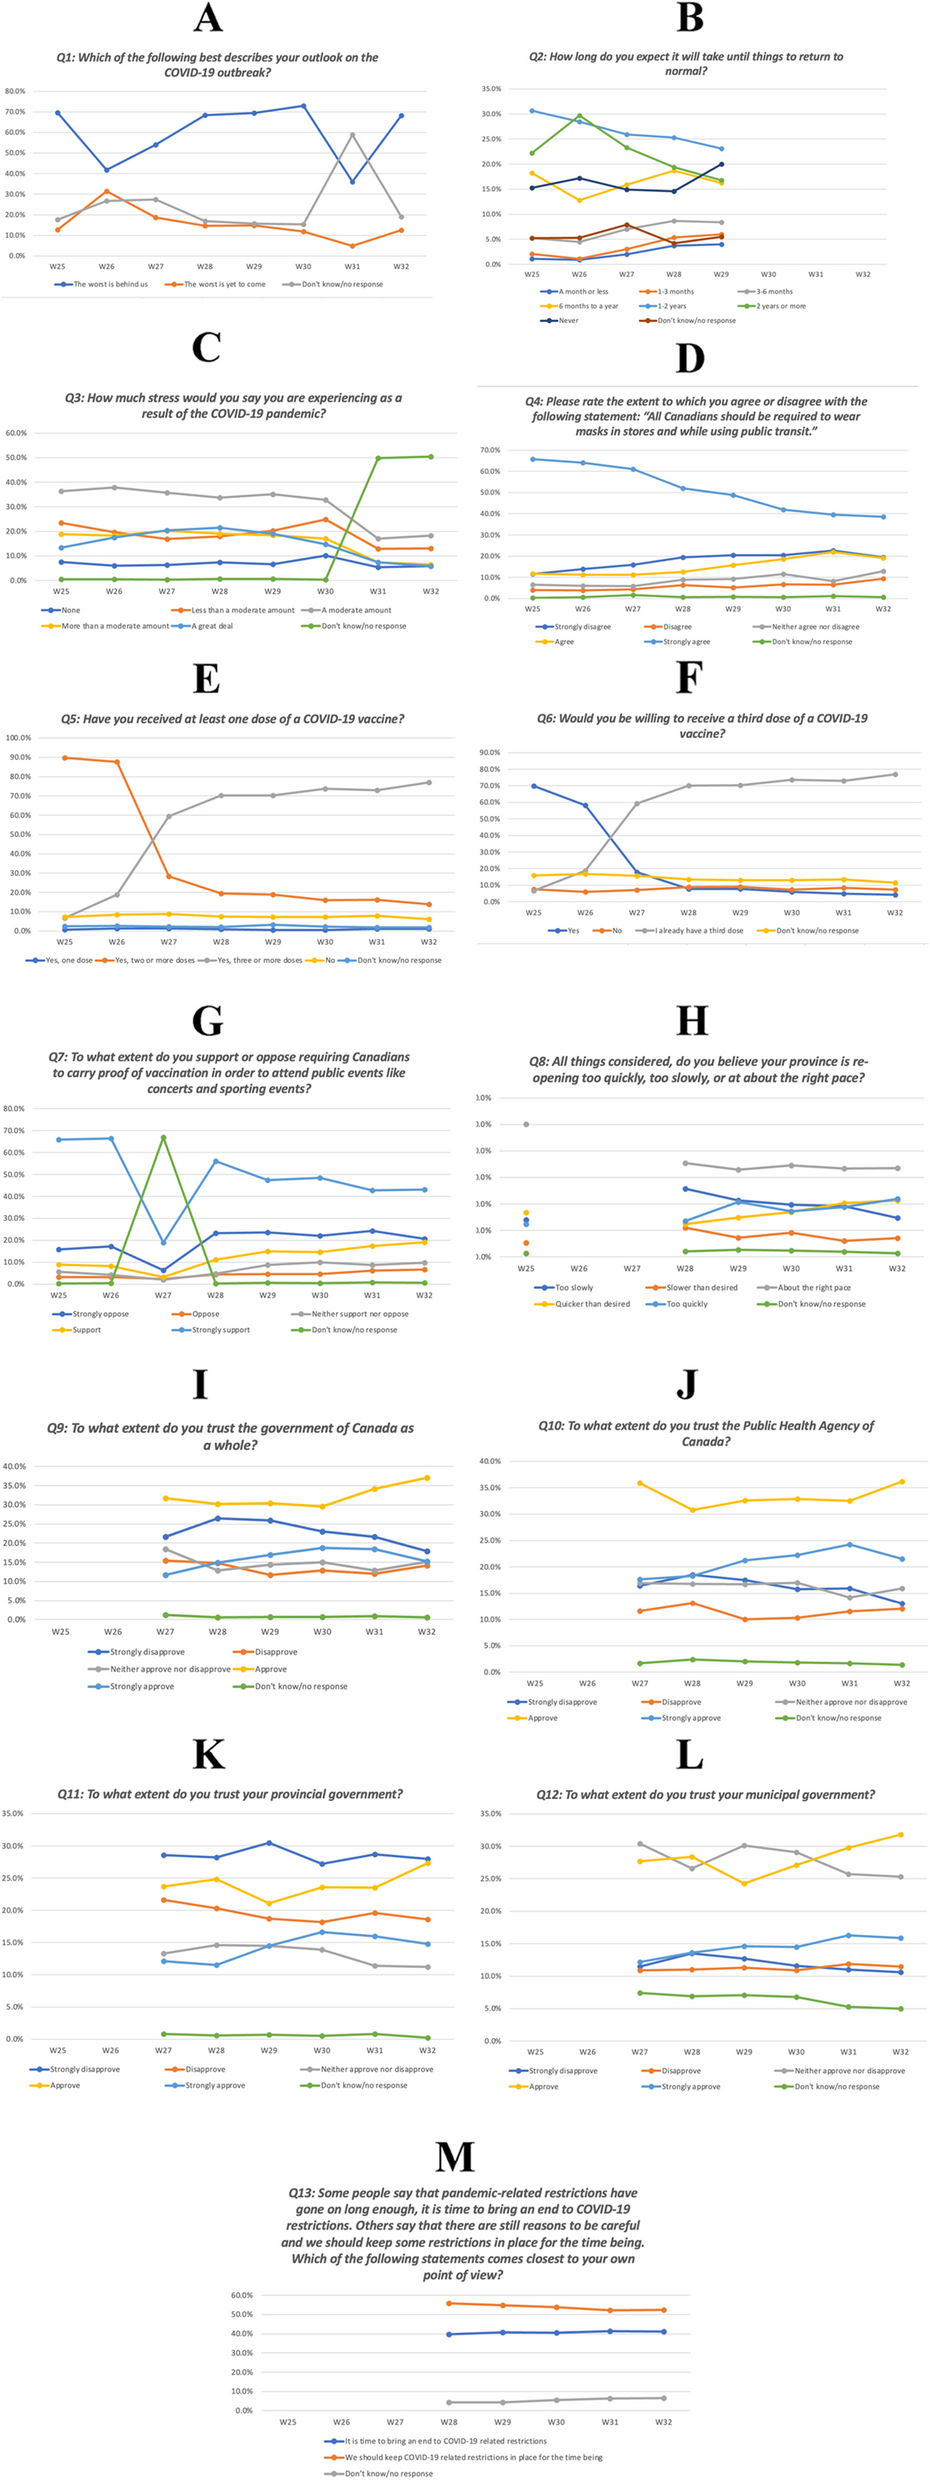 Public attitudes towards COVID-19 vaccine mandates and vaccine certificates in Canada: a time series study